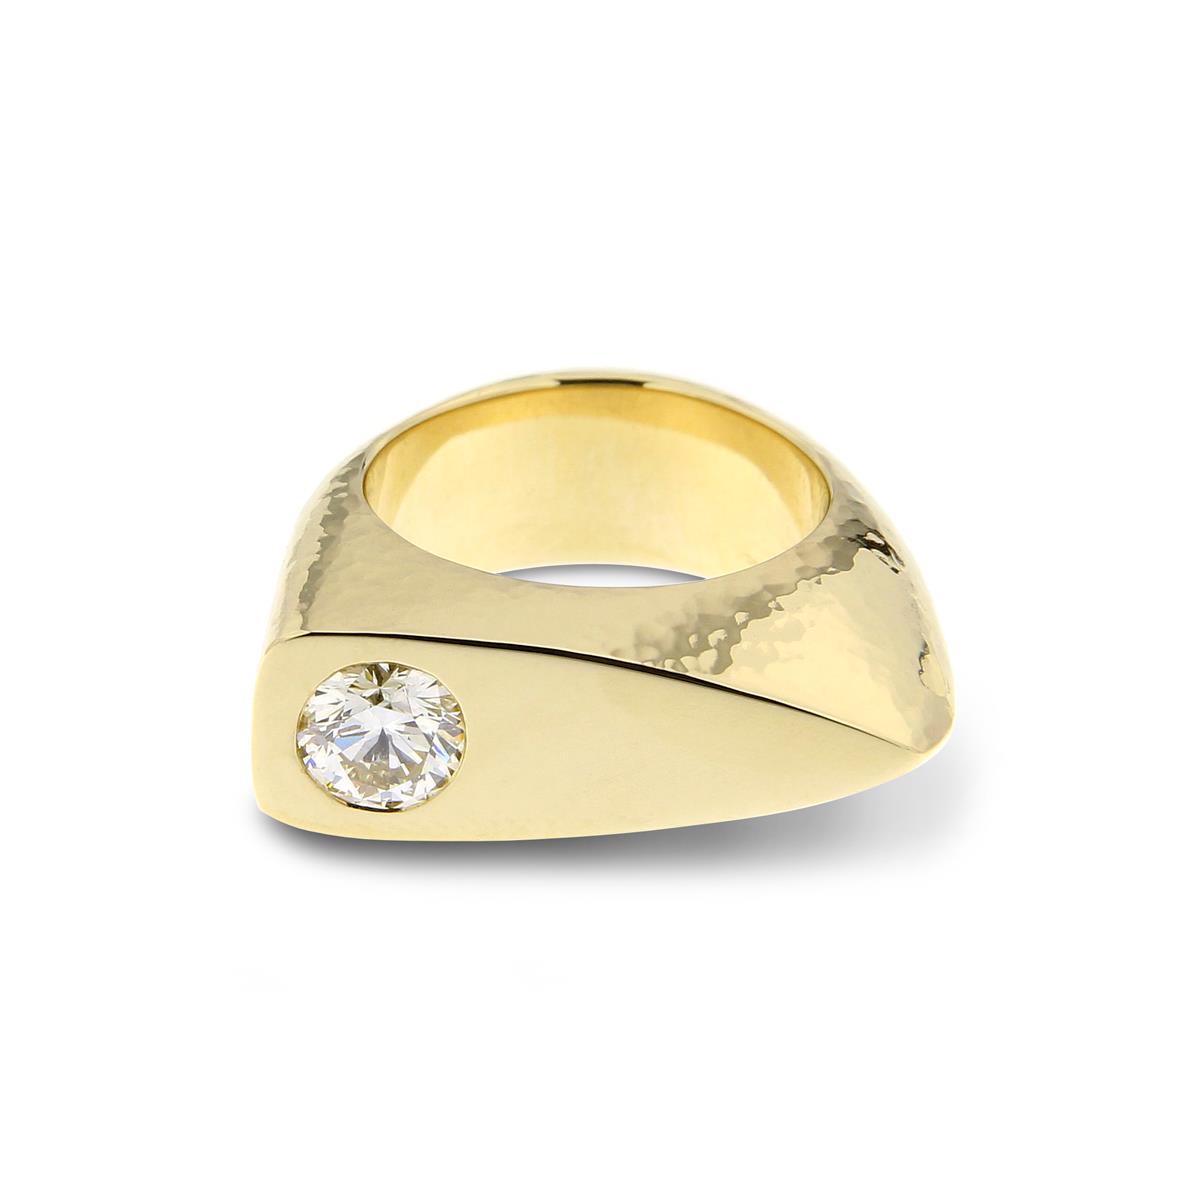 Katie g. Jewellery - aaa - Big gold Pinkie Ring - 1